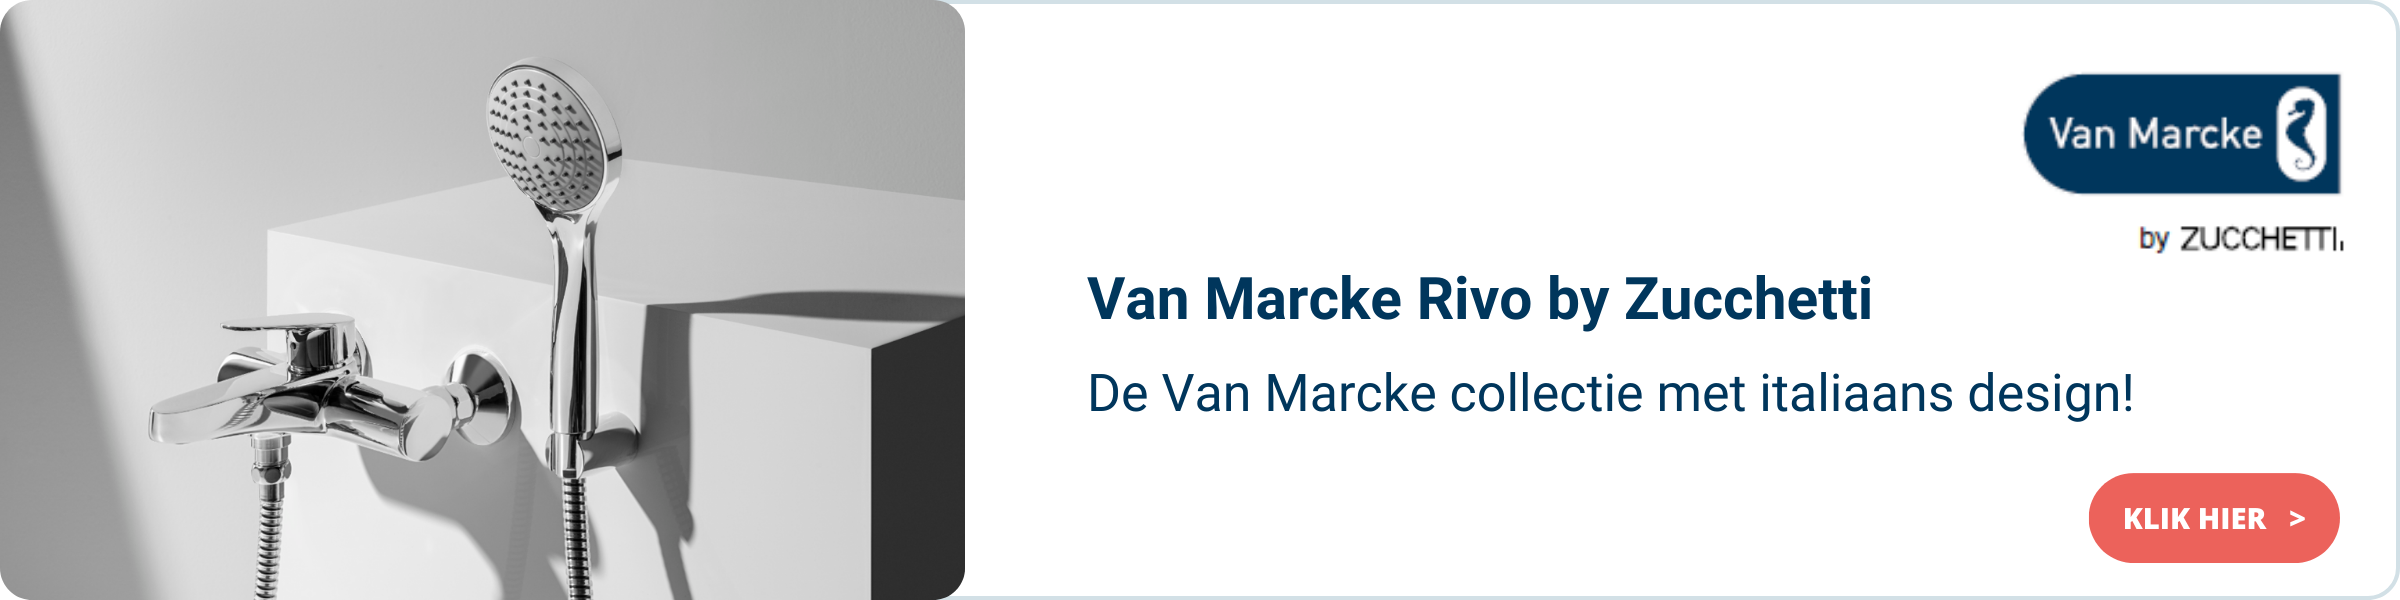 Van Marcke Rivo by Zucchetti - NL.png